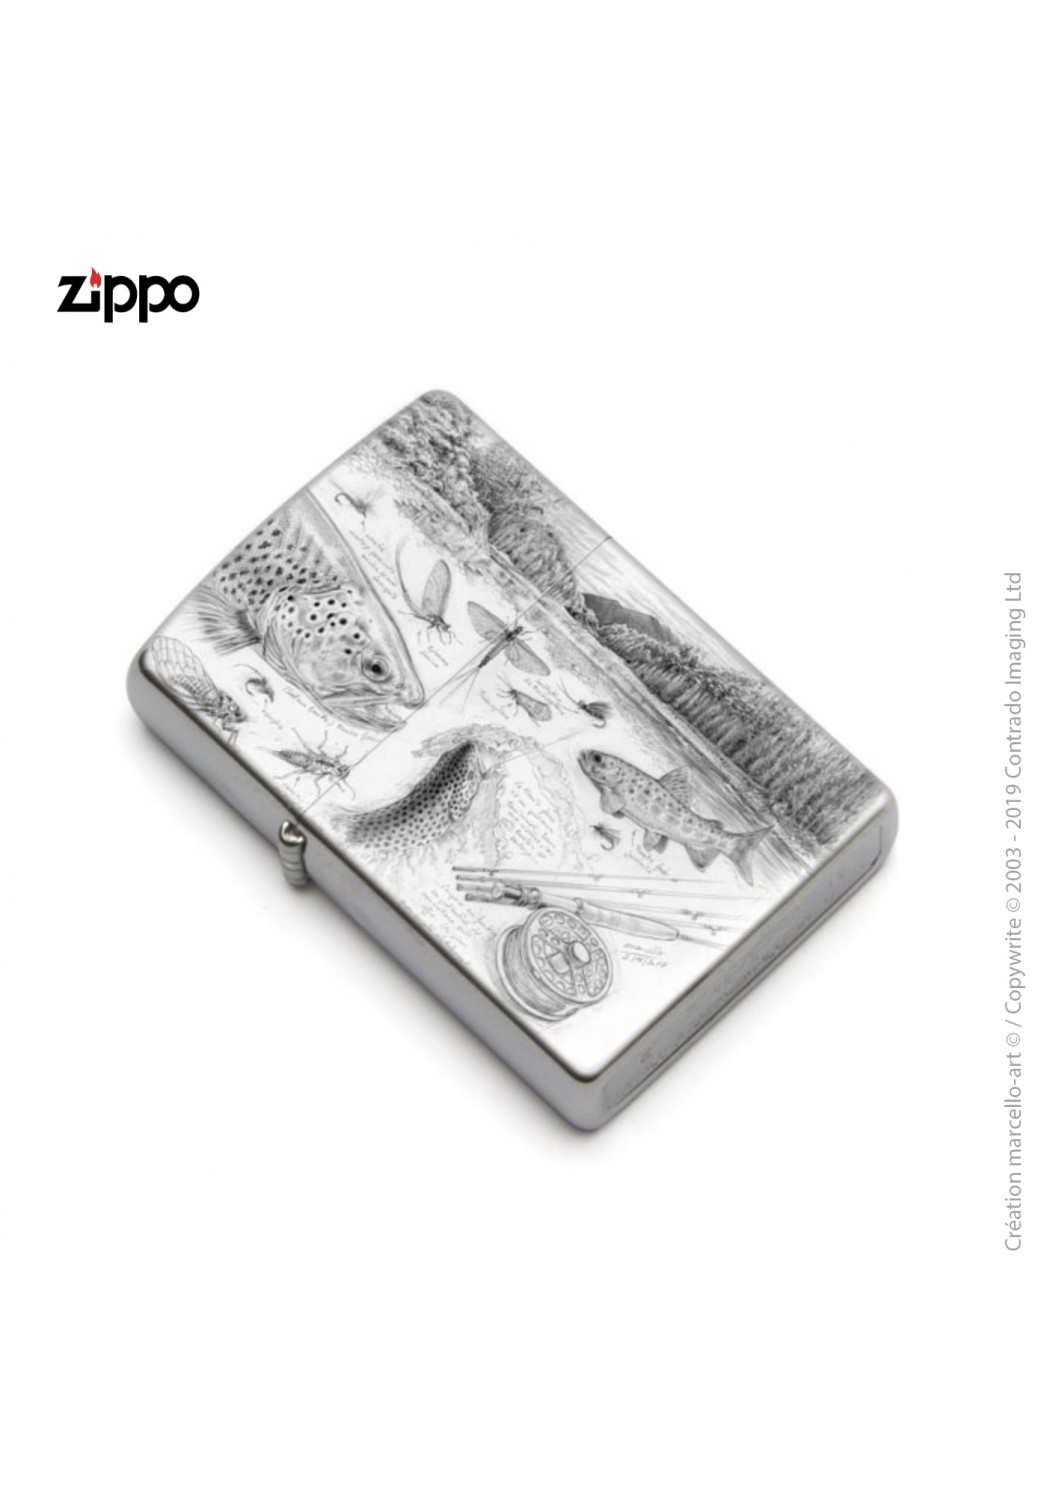 Marcello-art: Decoration accessoiries Zippo 374 A flyfishing NZ